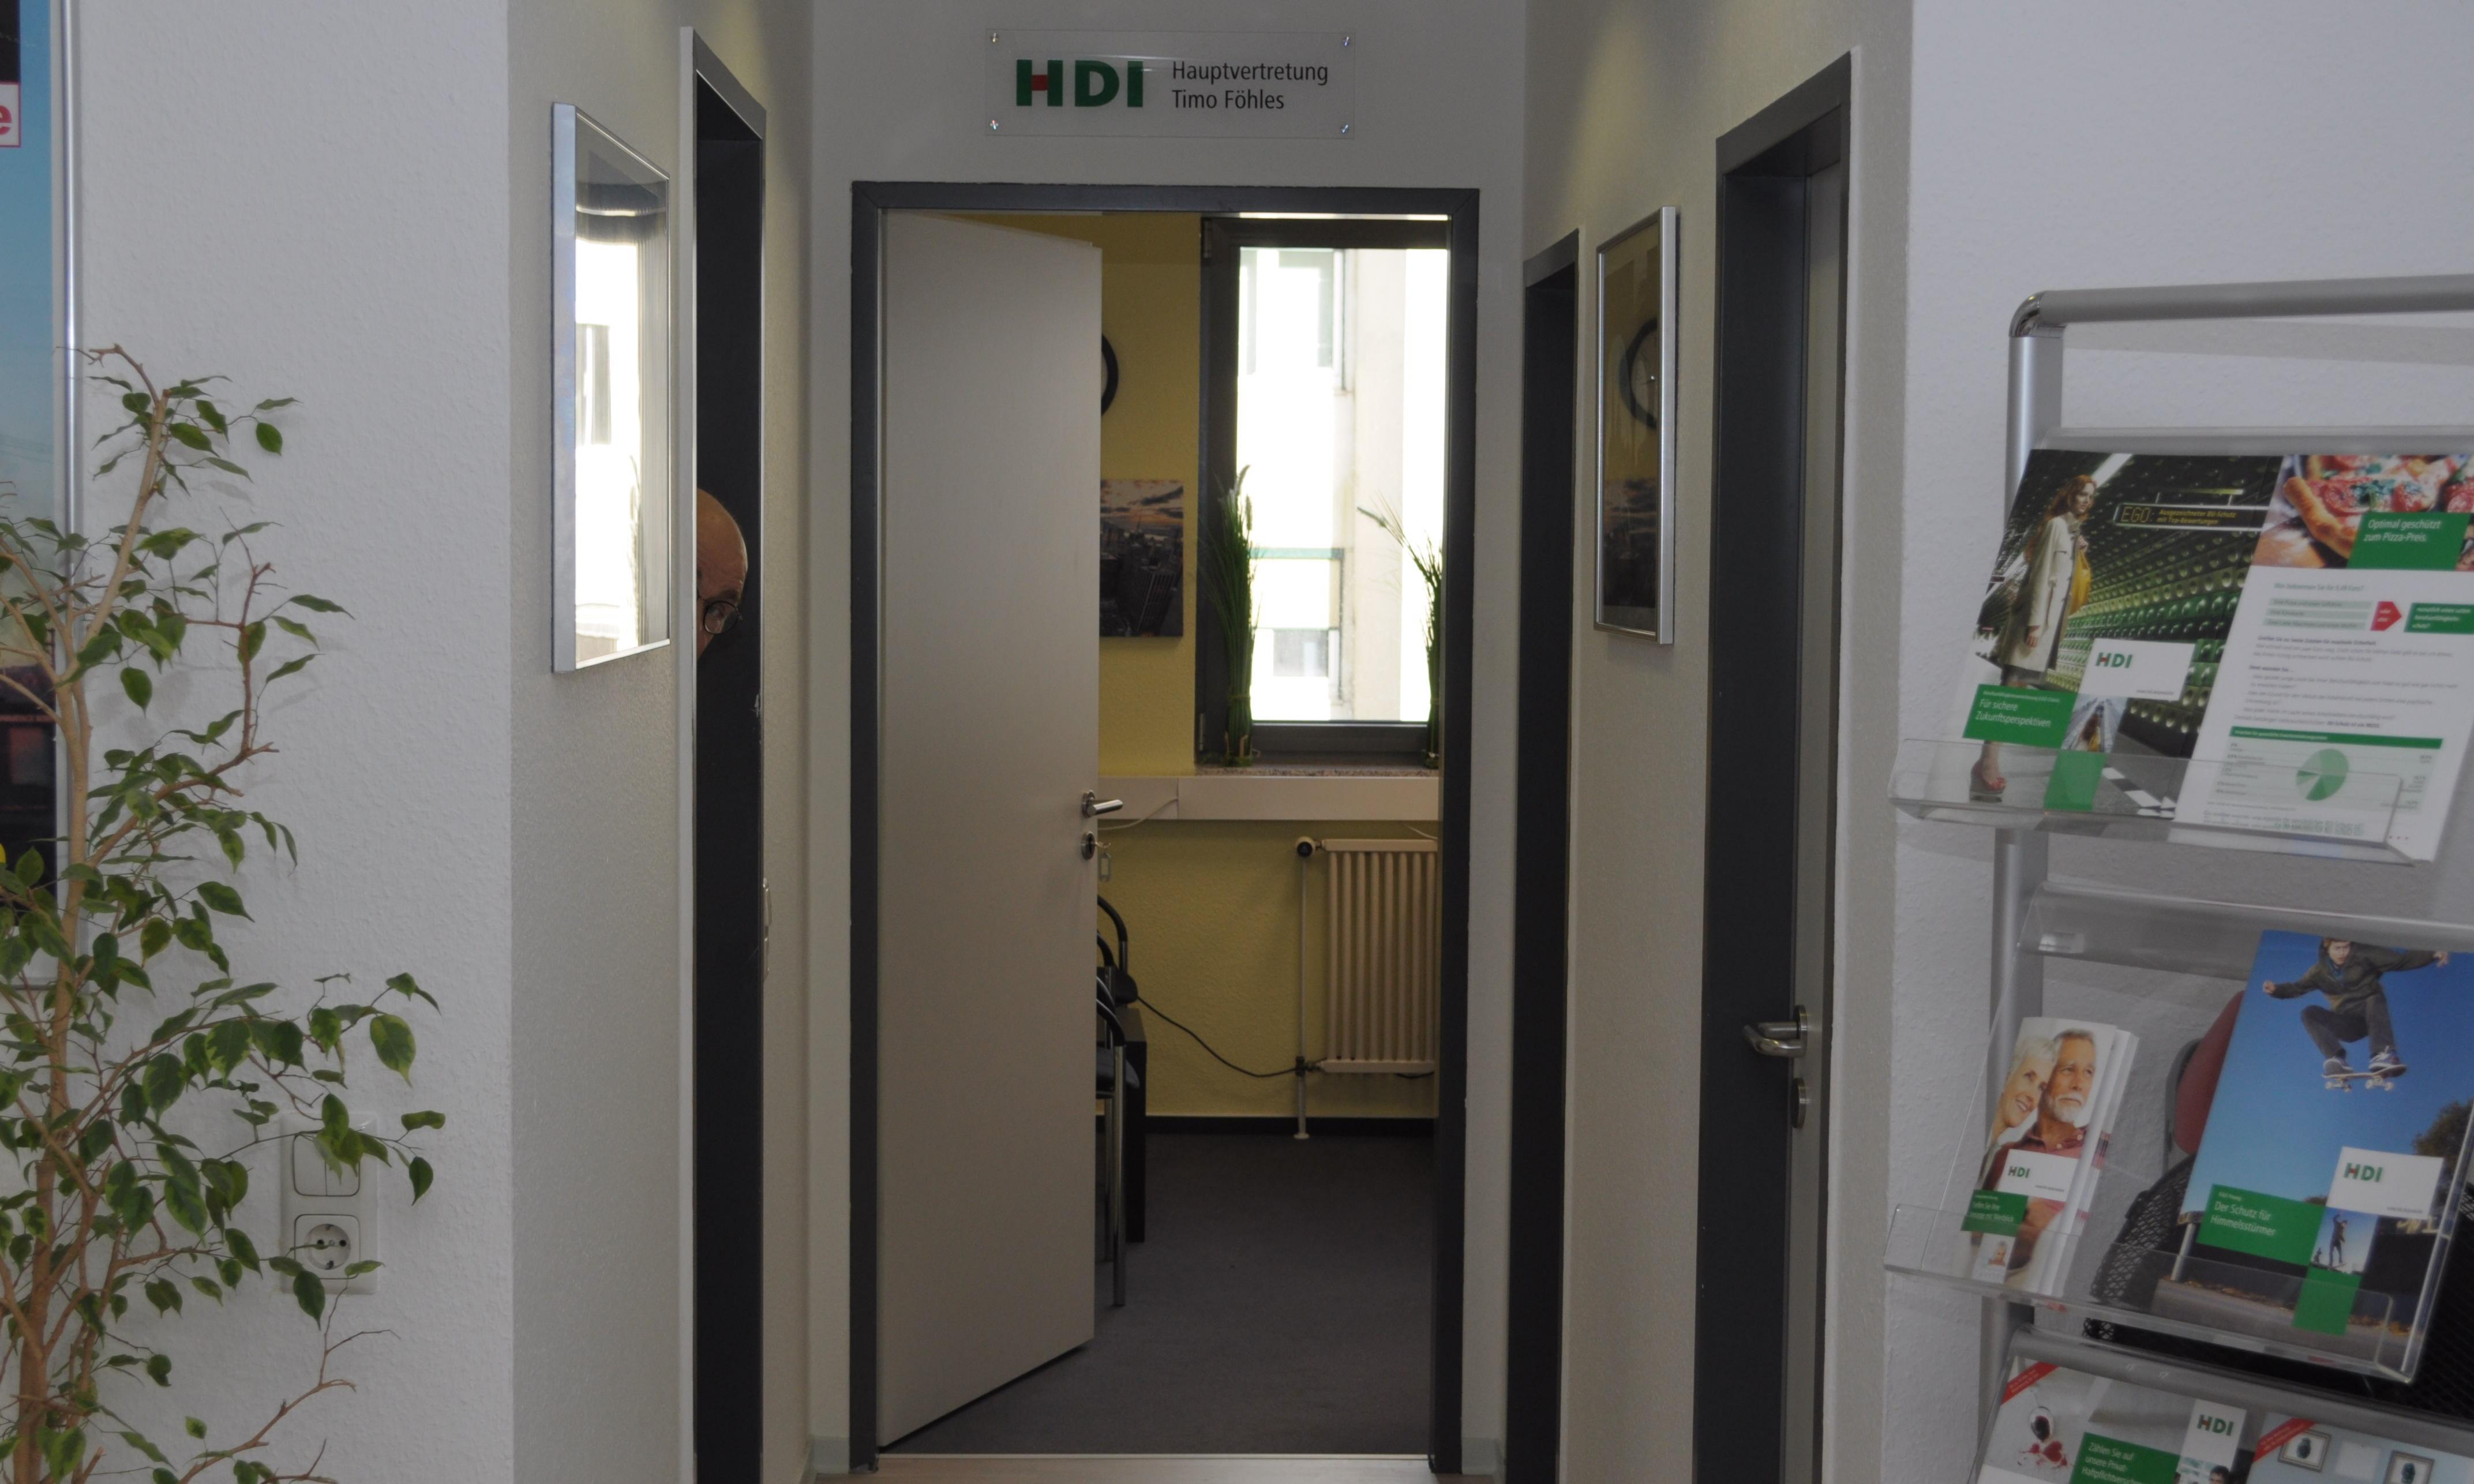 Eingang zur HDI Agentur Timo Föhles